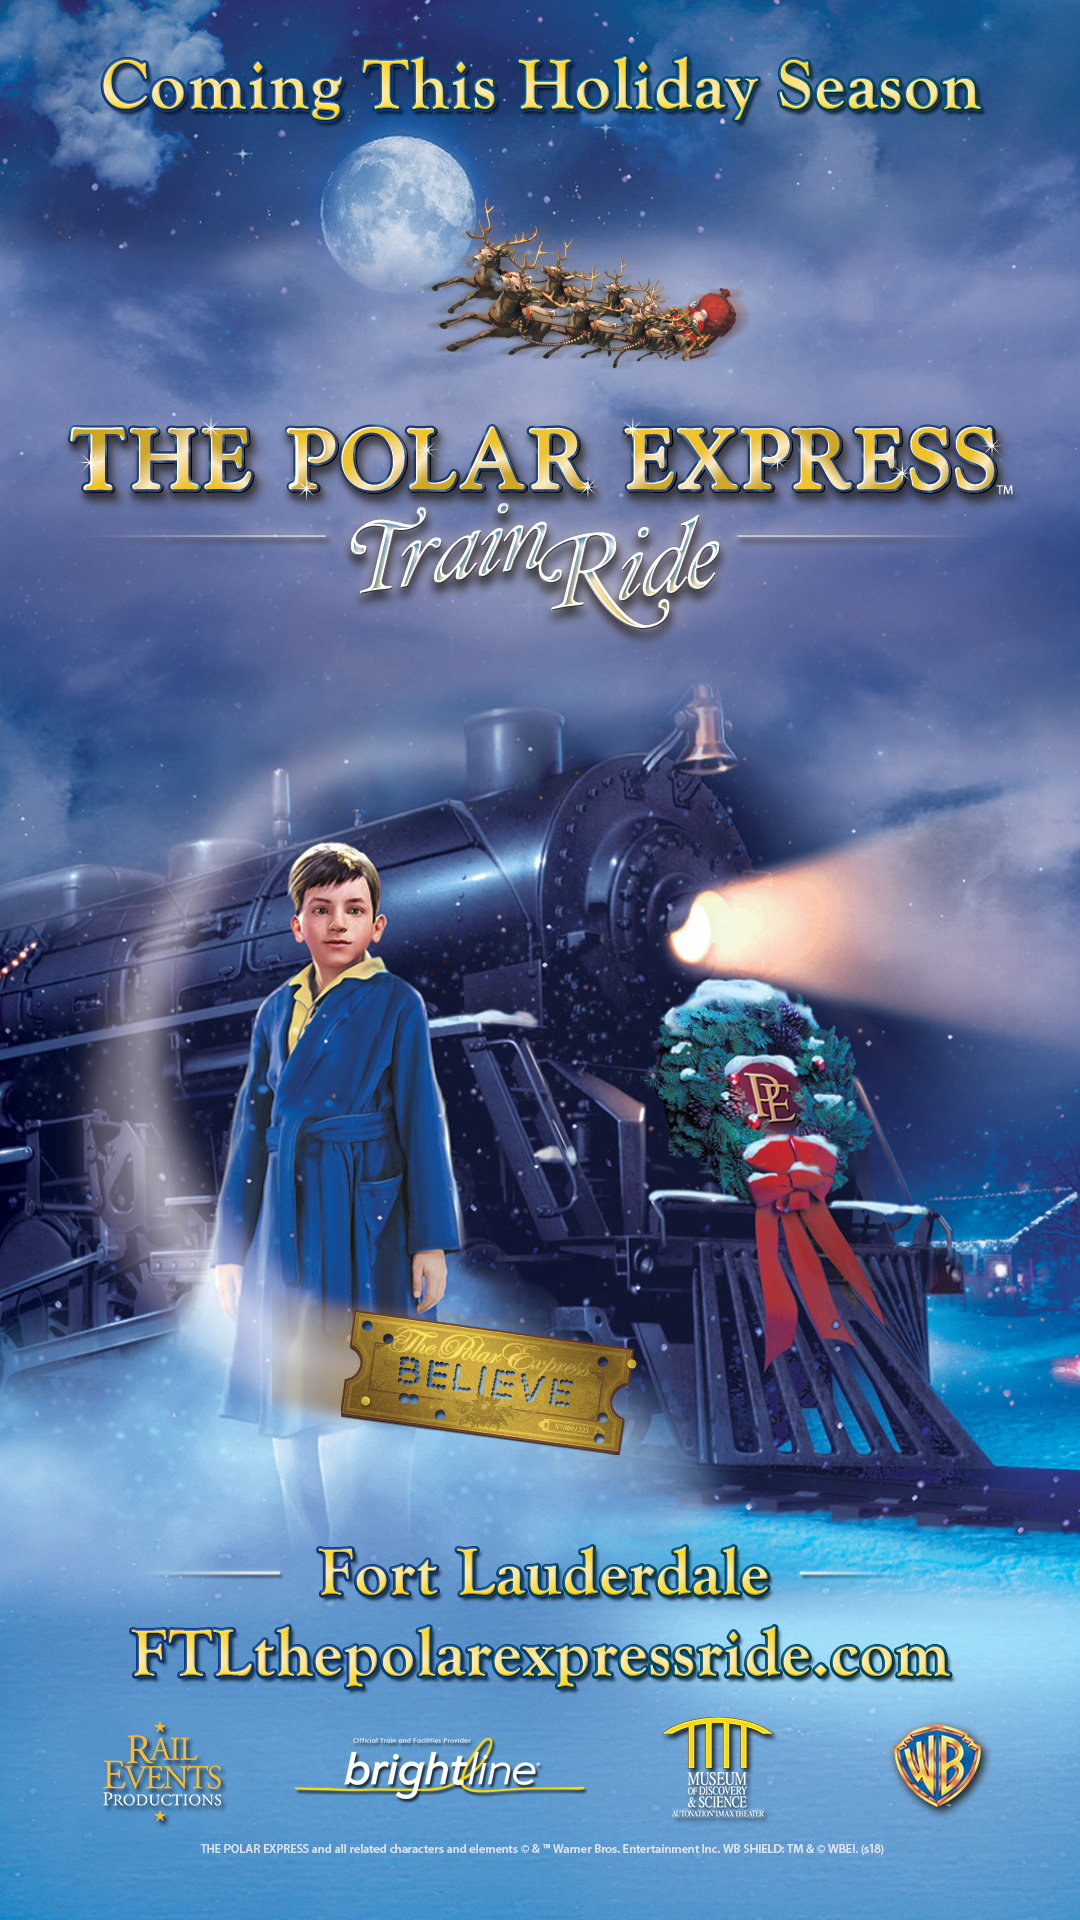 THE POLAR EXPRESS™ Train Ride